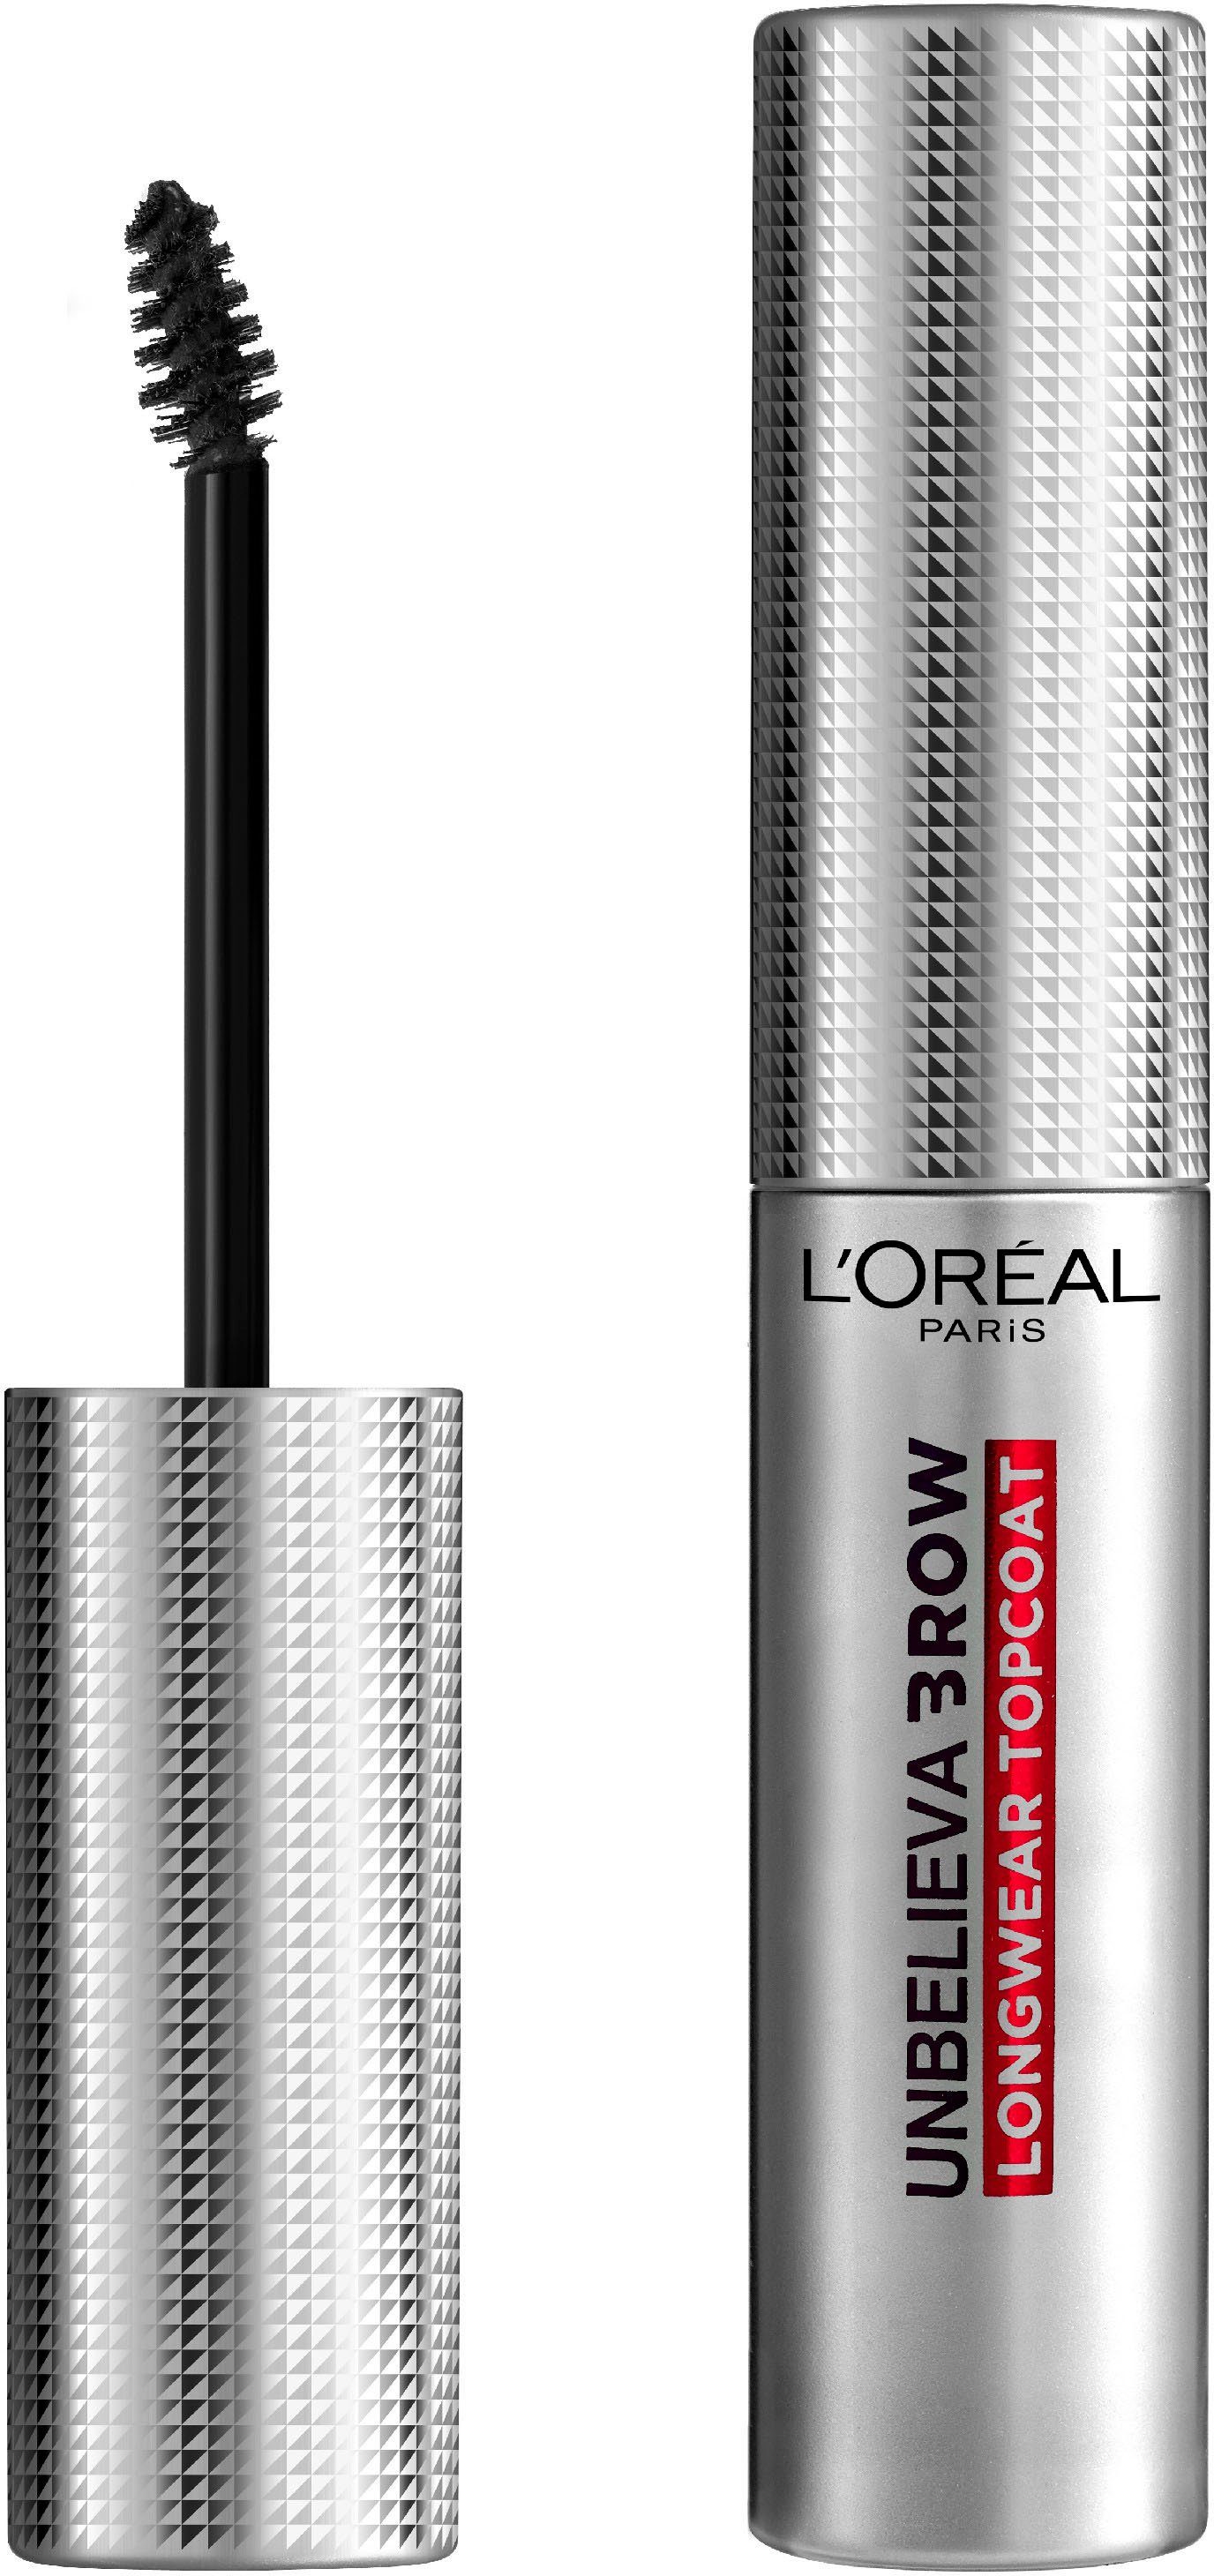 PARIS Topcoat, Unbelieva’Brow langanhaltend, mit präziser Augen-Make-Up Mascara-Bürste, Longwear Augenbrauen-Kosmetika L'ORÉAL